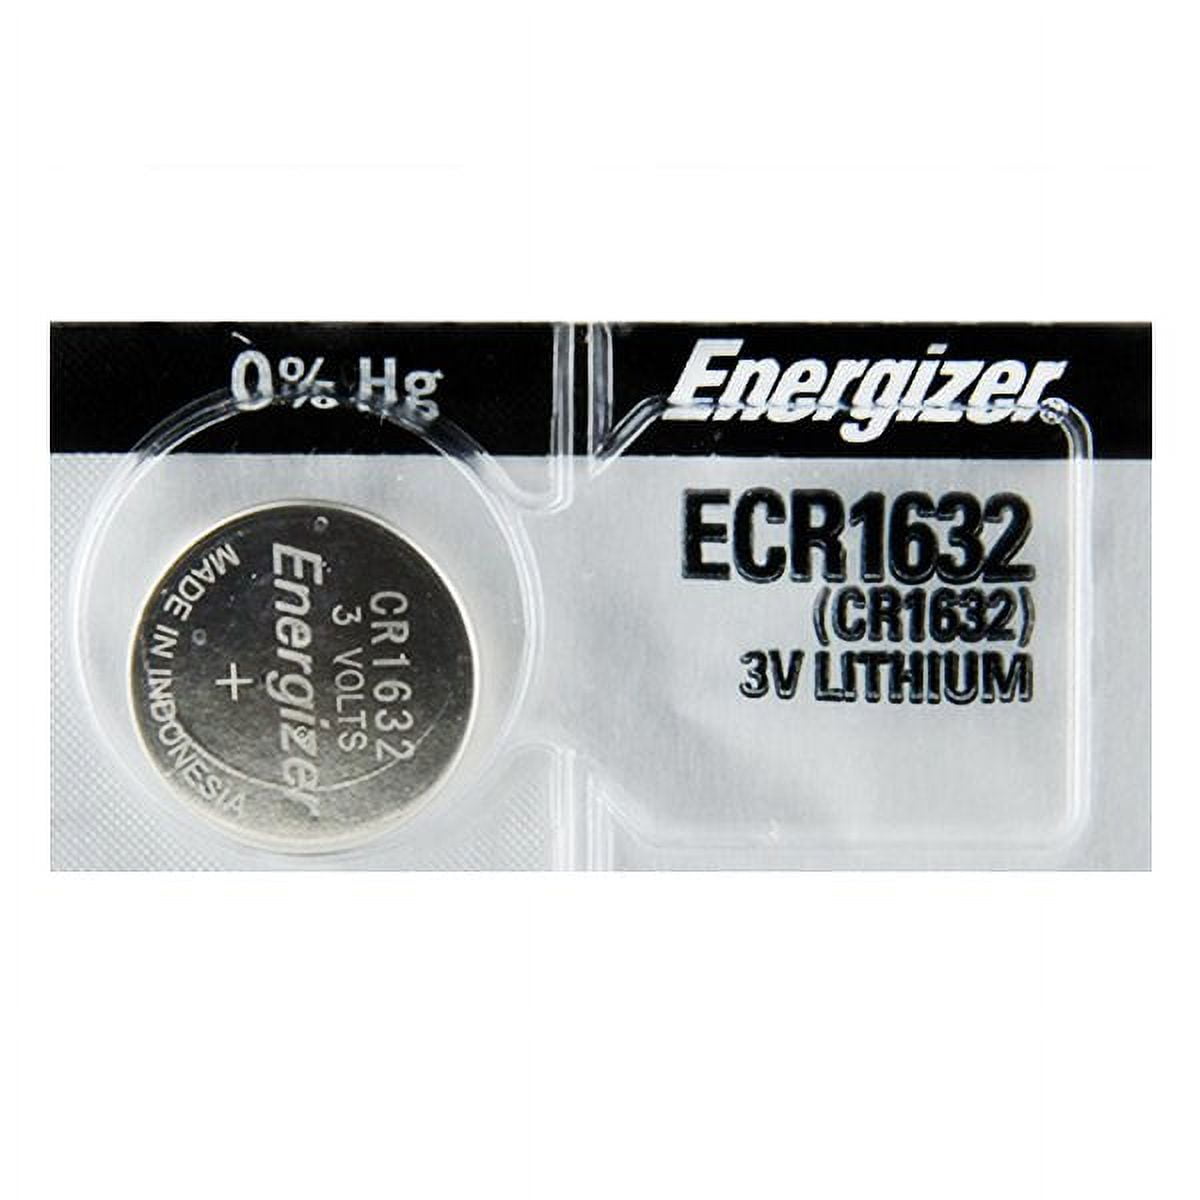 10 x ENERGIZER 1632 Lithium 3V Batteries CR1632 FREE UK